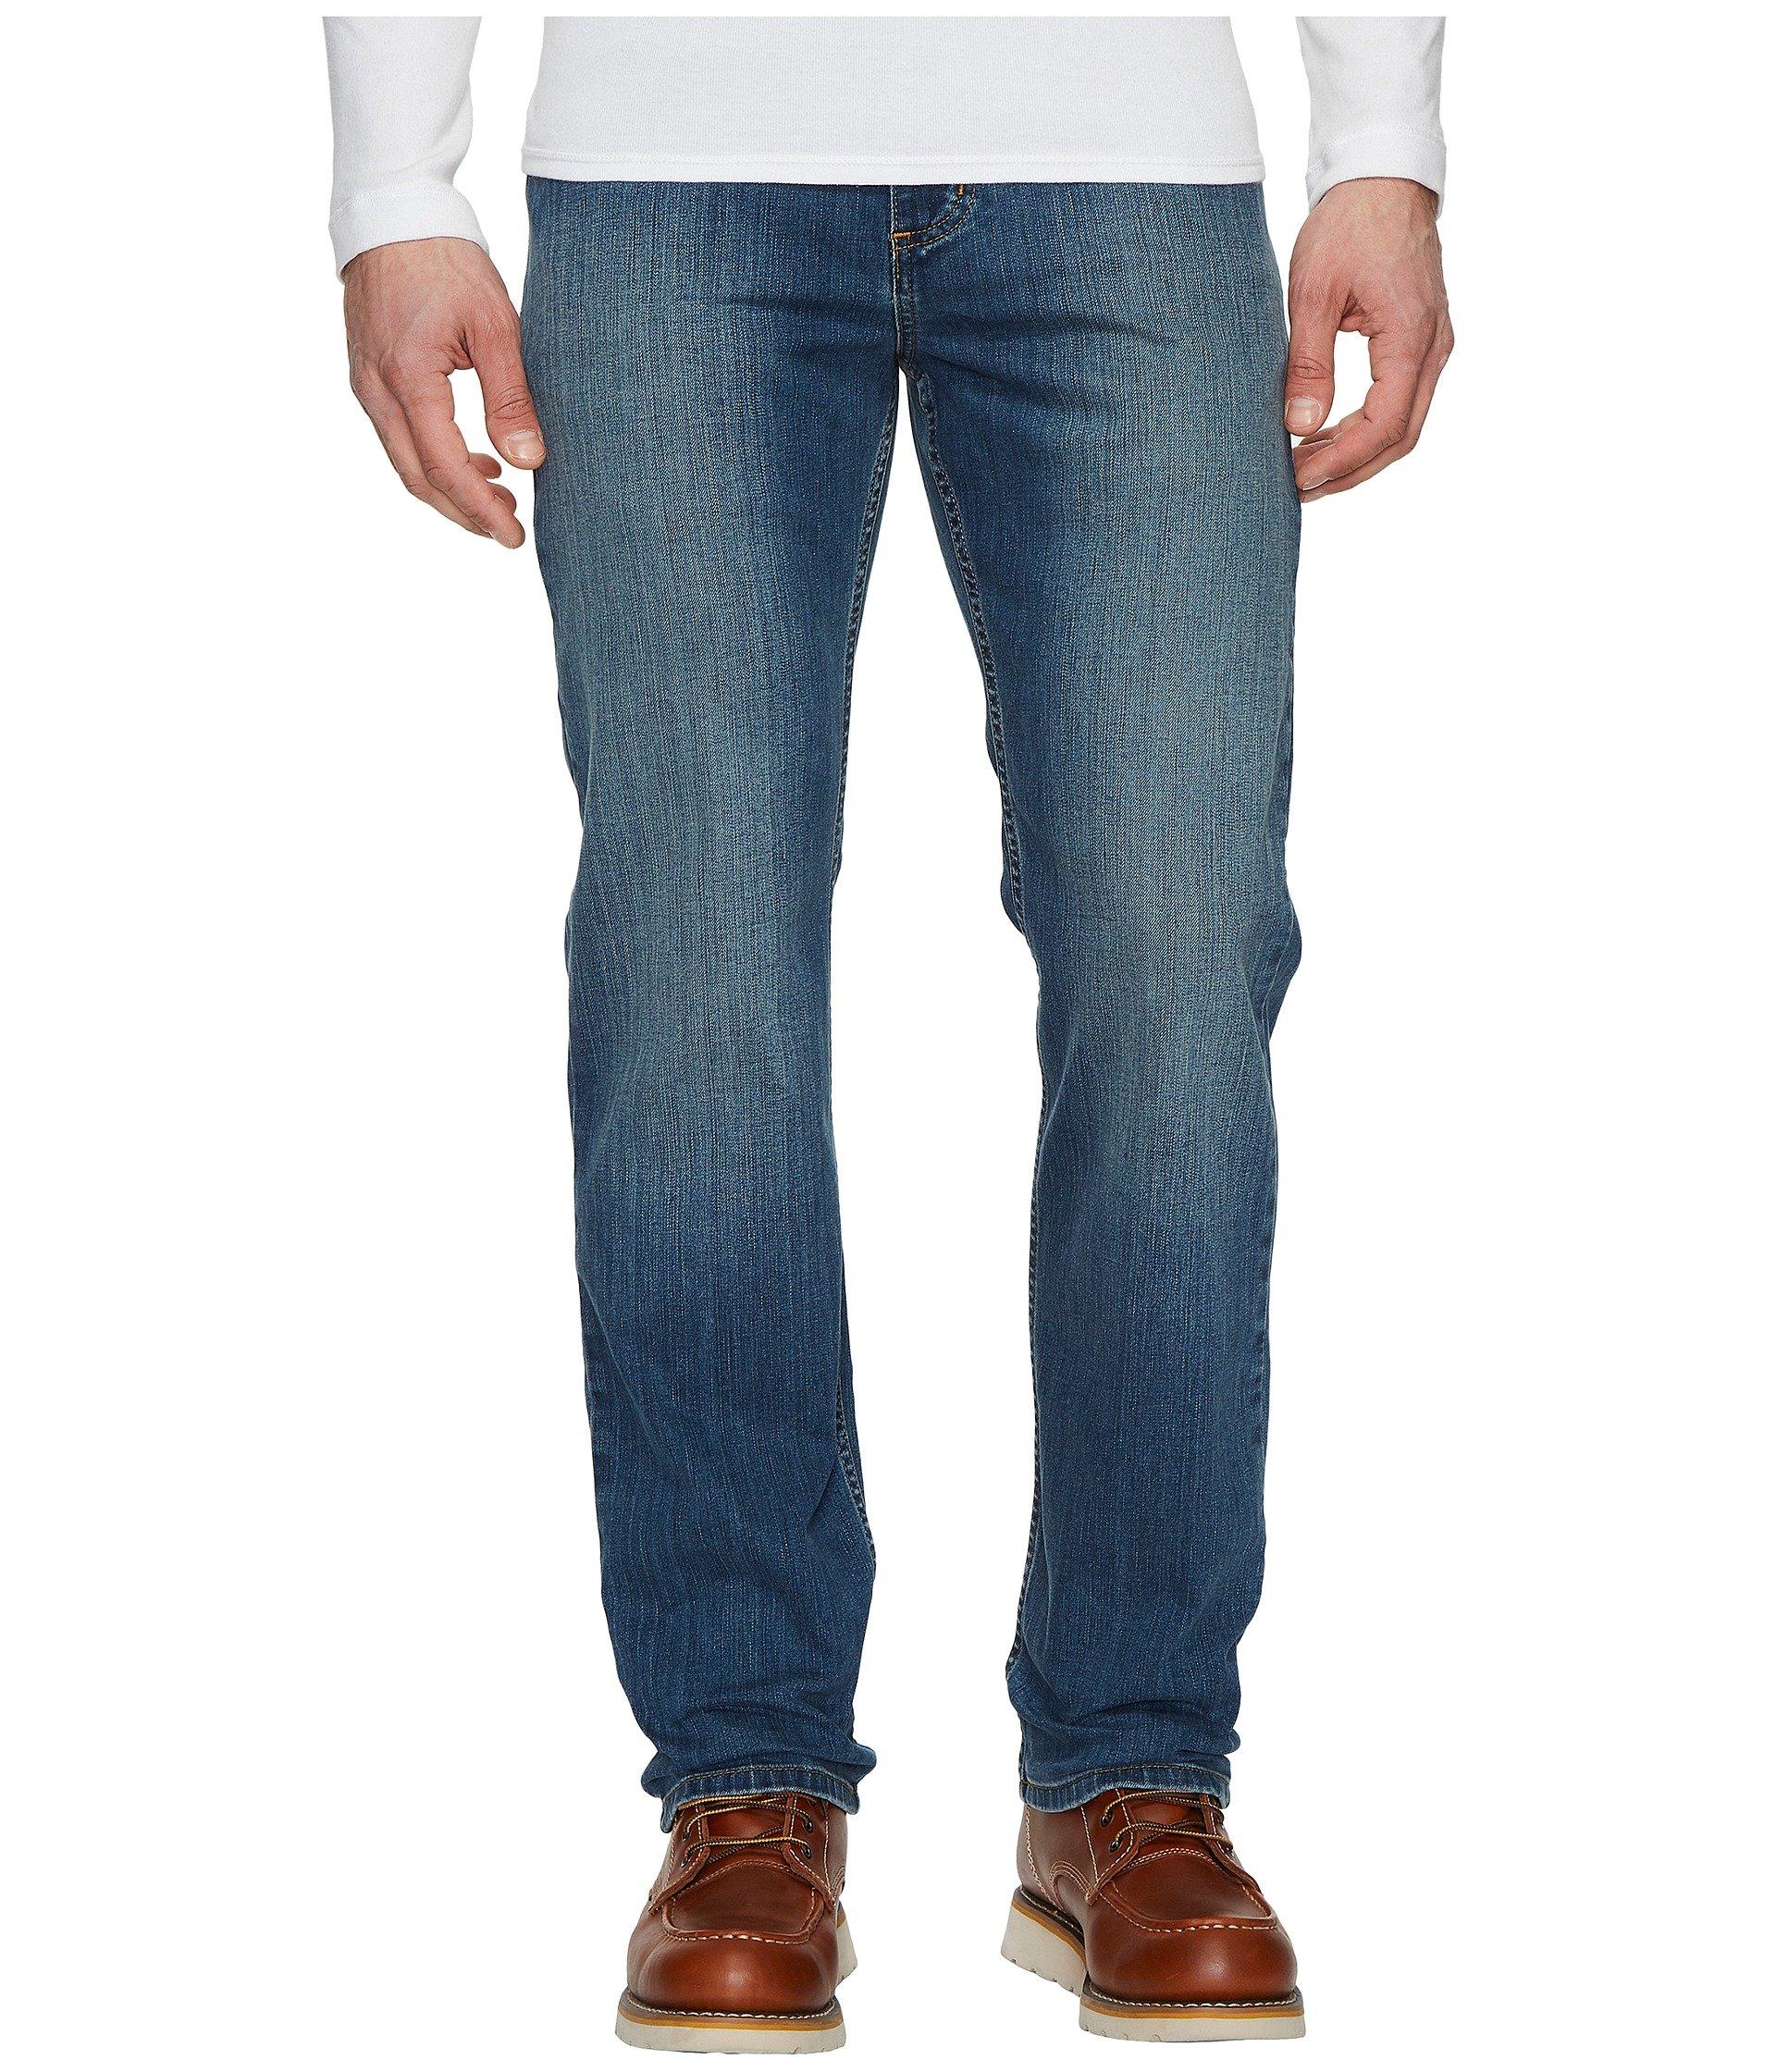 Carhartt Denim Rugged Flex(r) Relaxed Straight Jeans in Blue for Men - Lyst